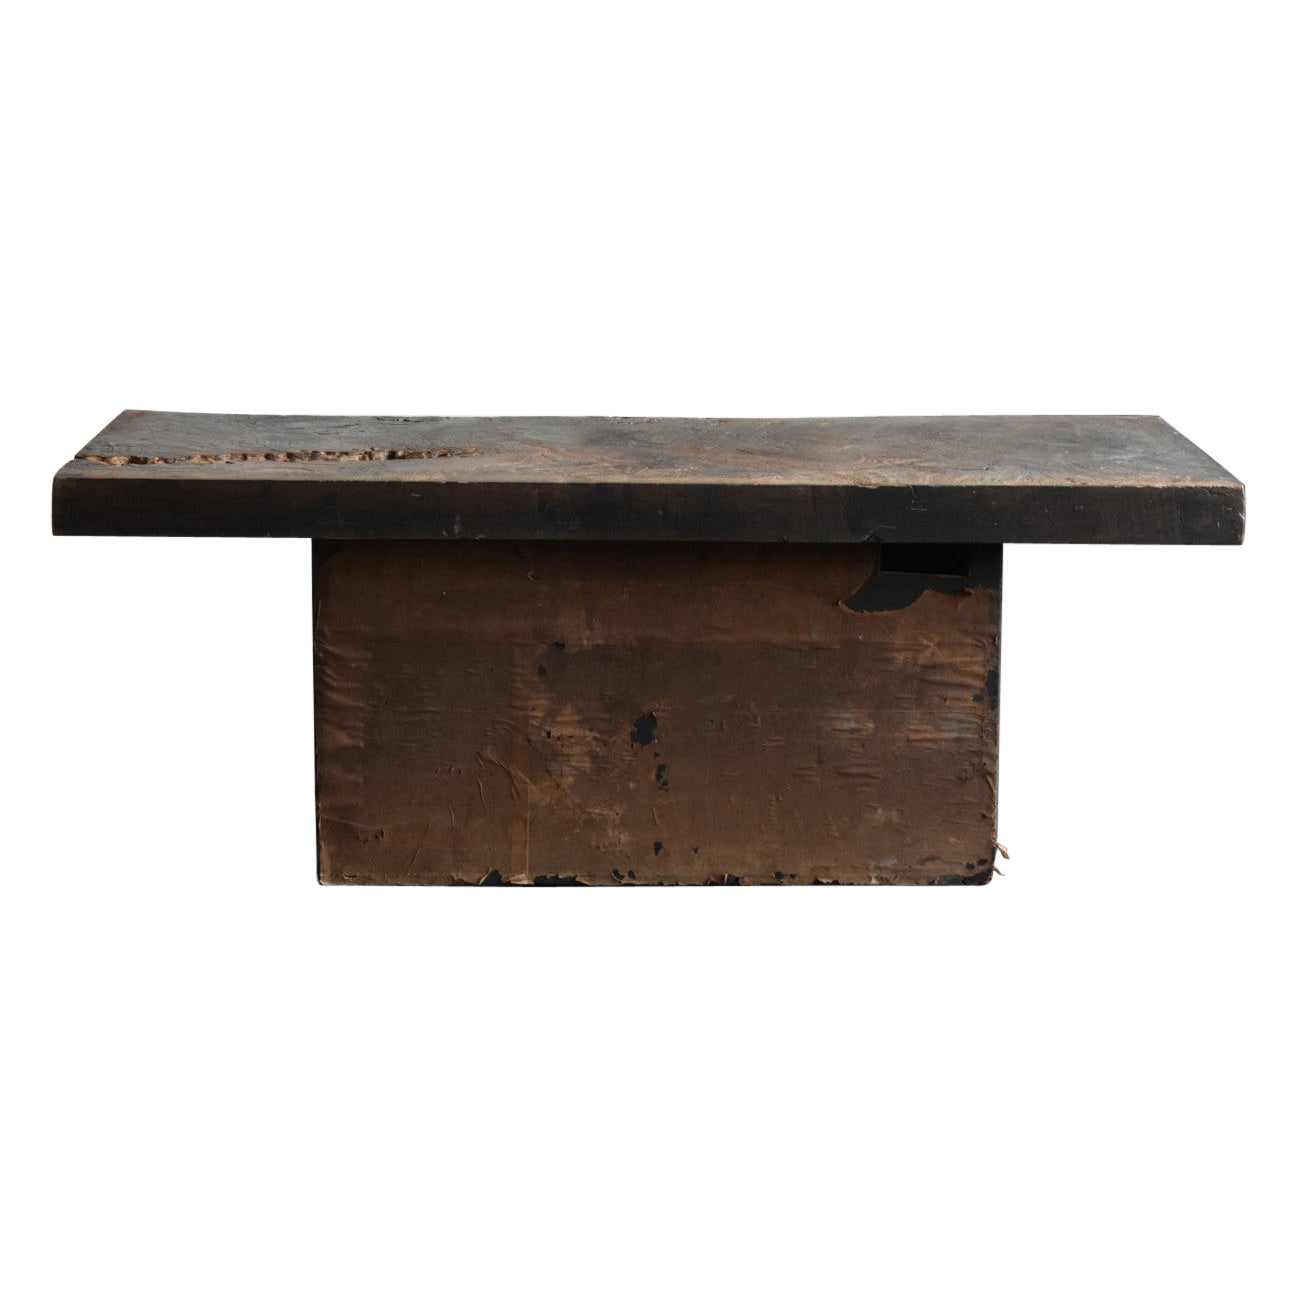 Japanese antique wabi sabi low table/1868-1912/very cool wood grain top